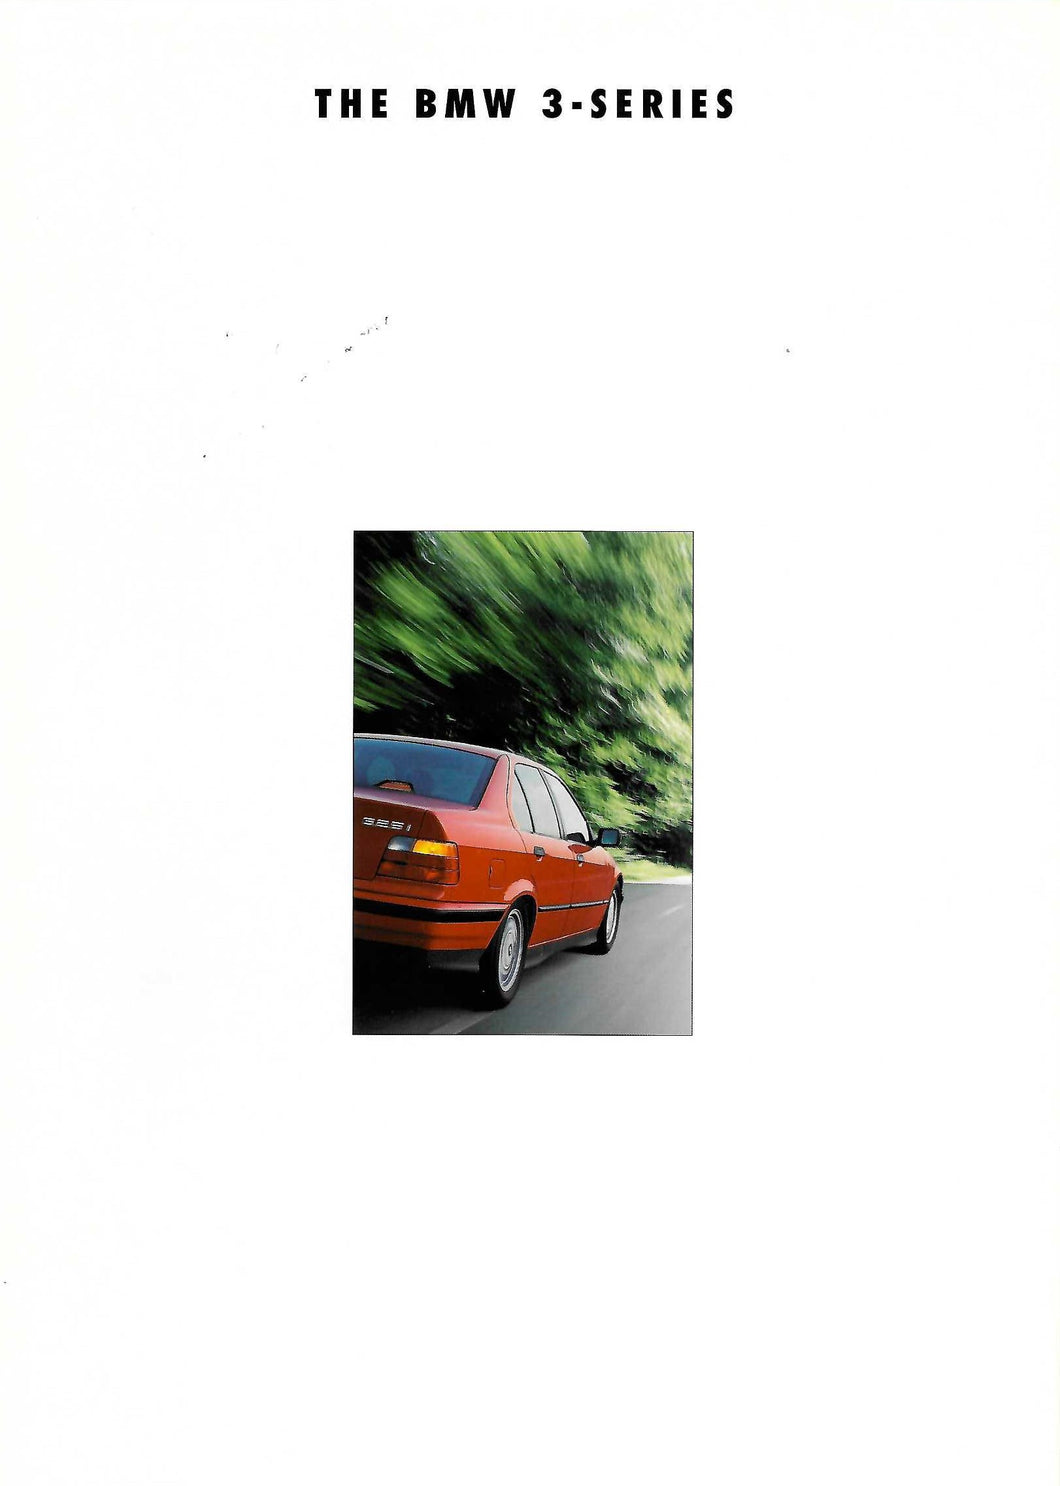 Brochure - THE BMW 3-SERIES (1993)